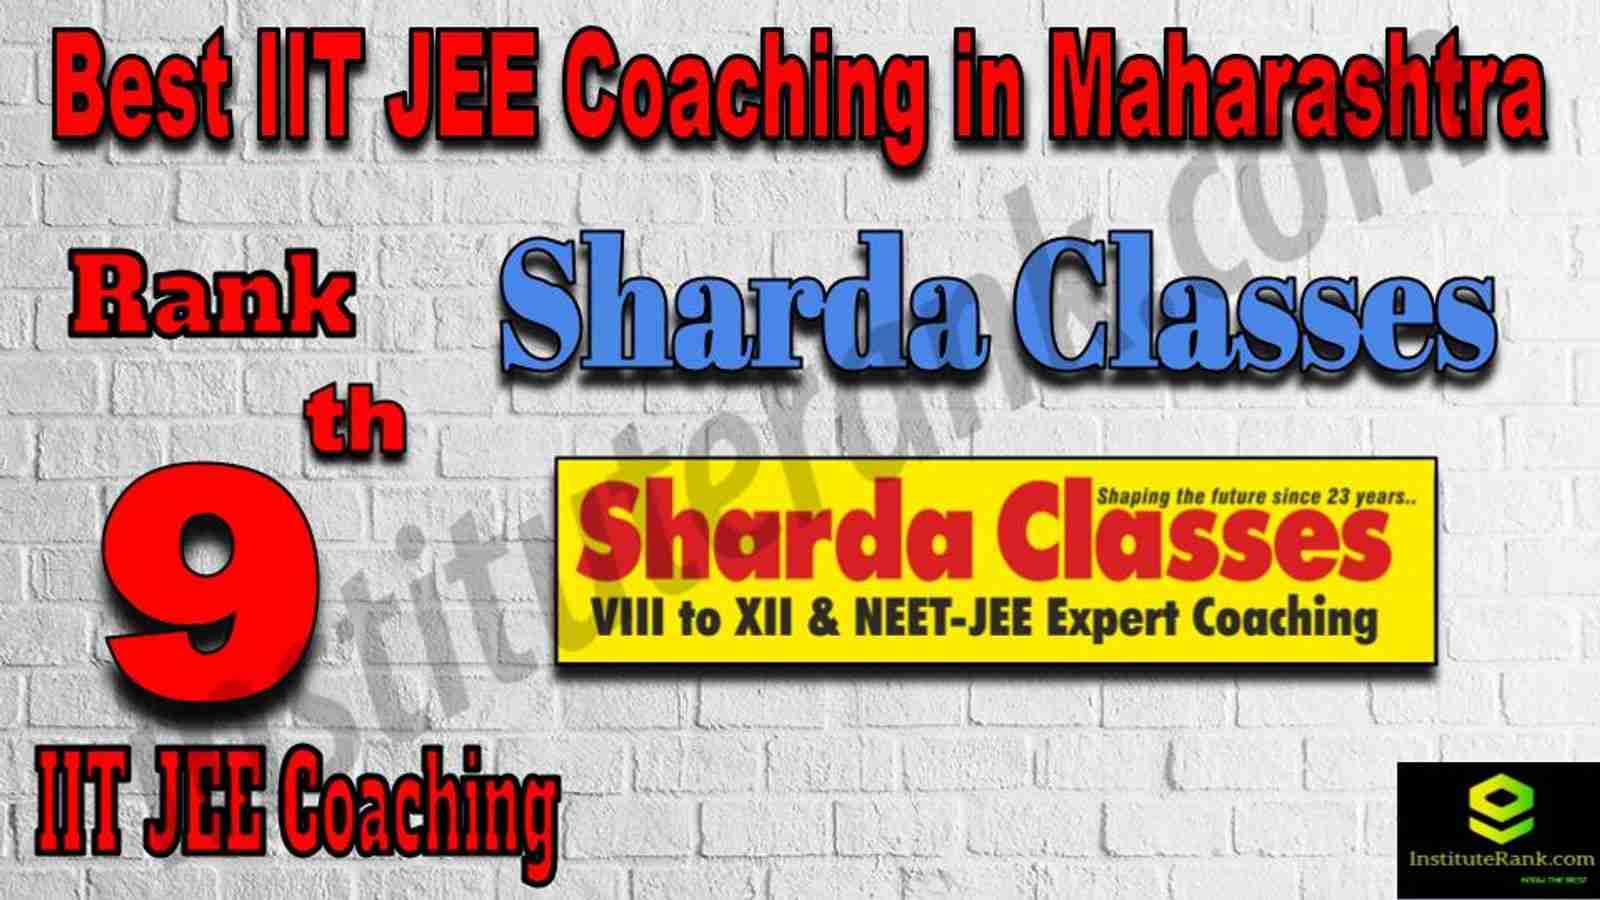 9th Best IIT JEE Coaching in Maharashtra